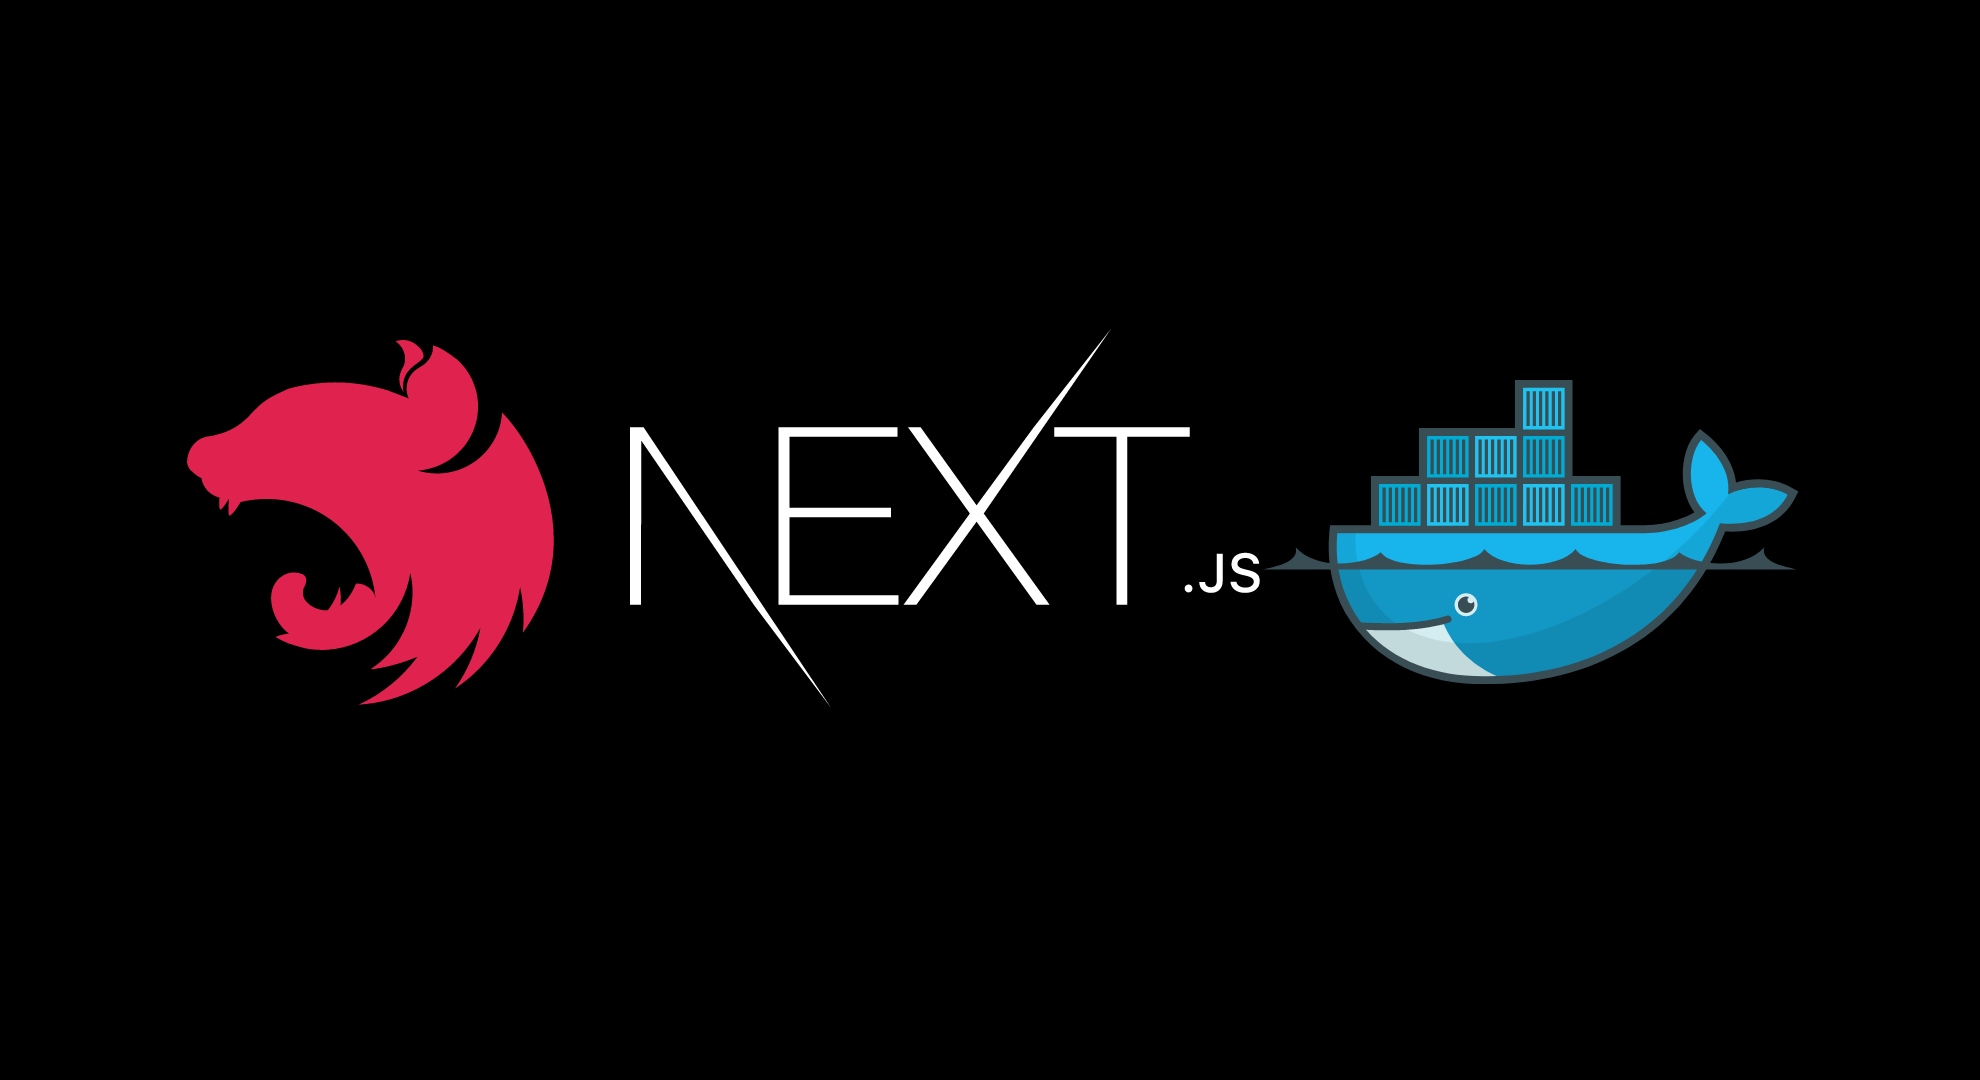 Nest.jsとNext.jsをDocker環境で構築する